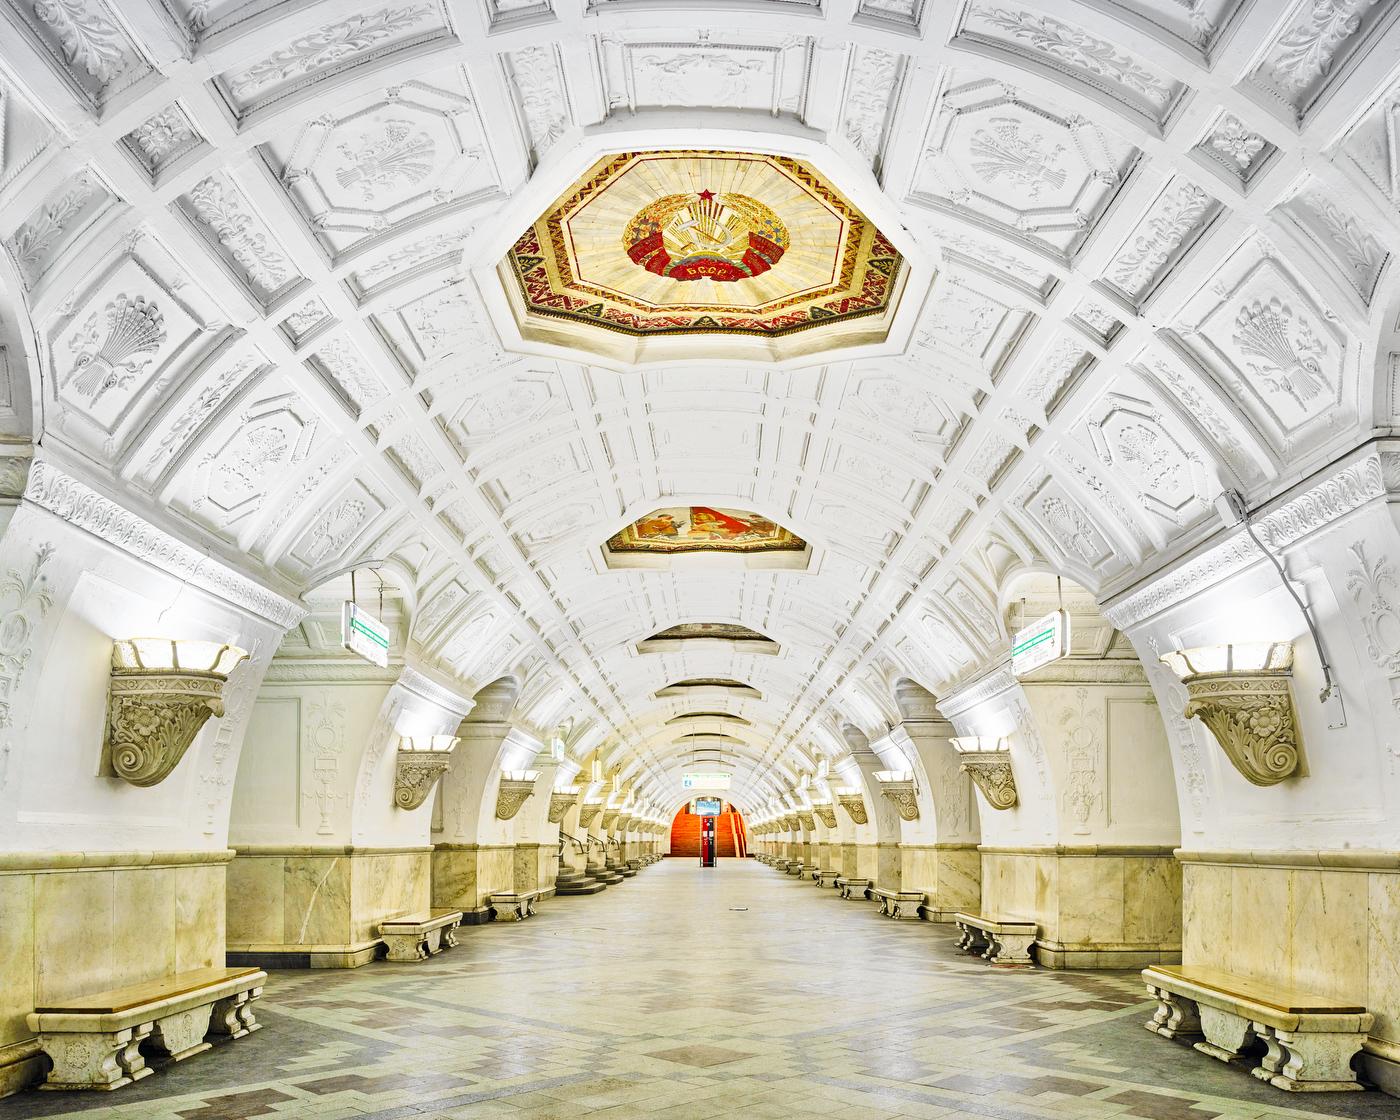 David Burdeny - Belorusskaya Station, Moscow, Russia, 2015, Printed After